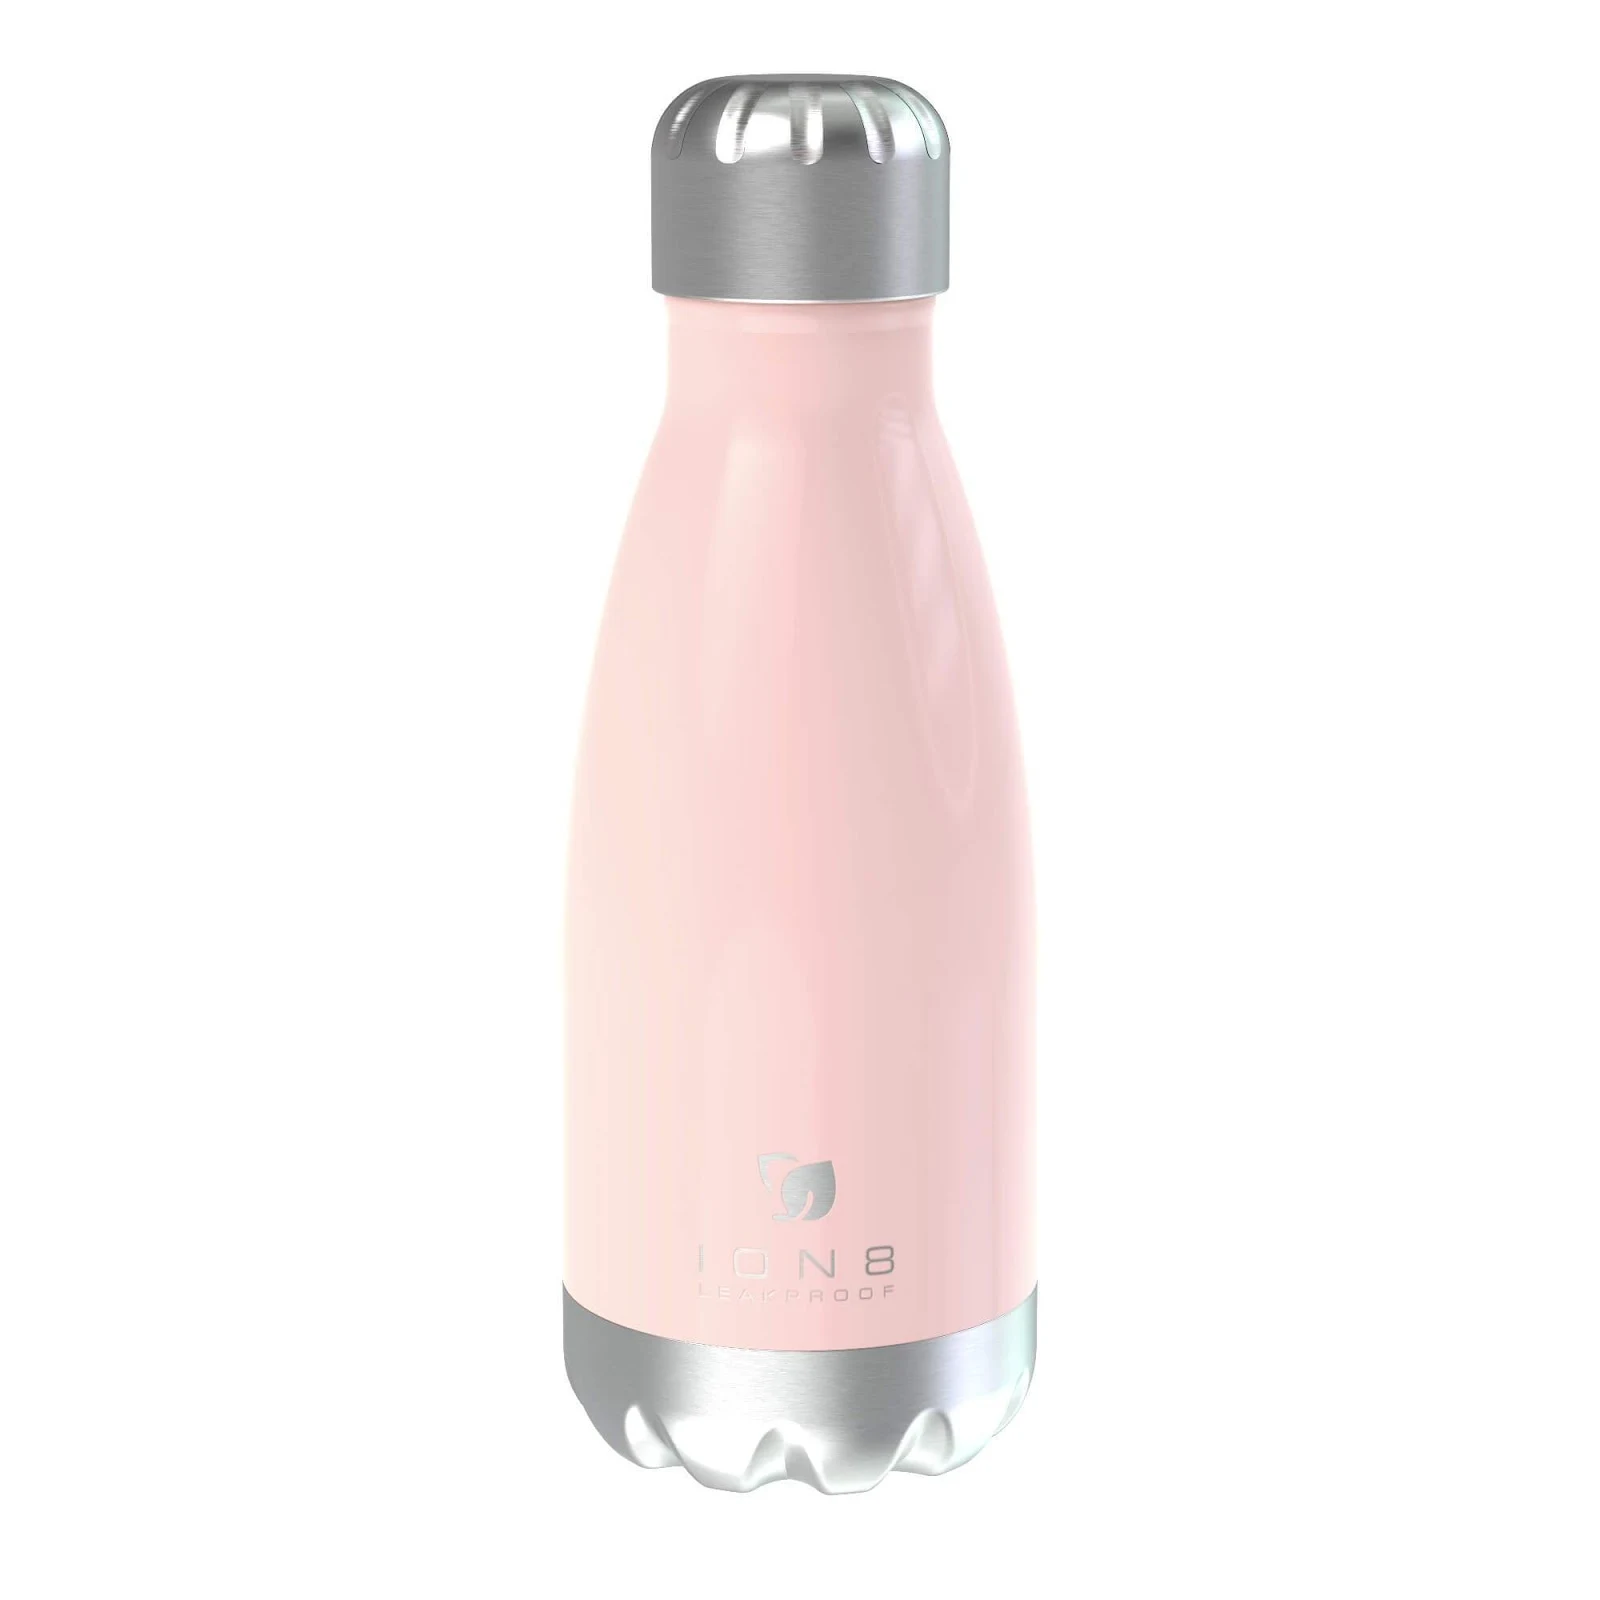 Ion8 Leak Proof Flask in Rose Quartz Pink